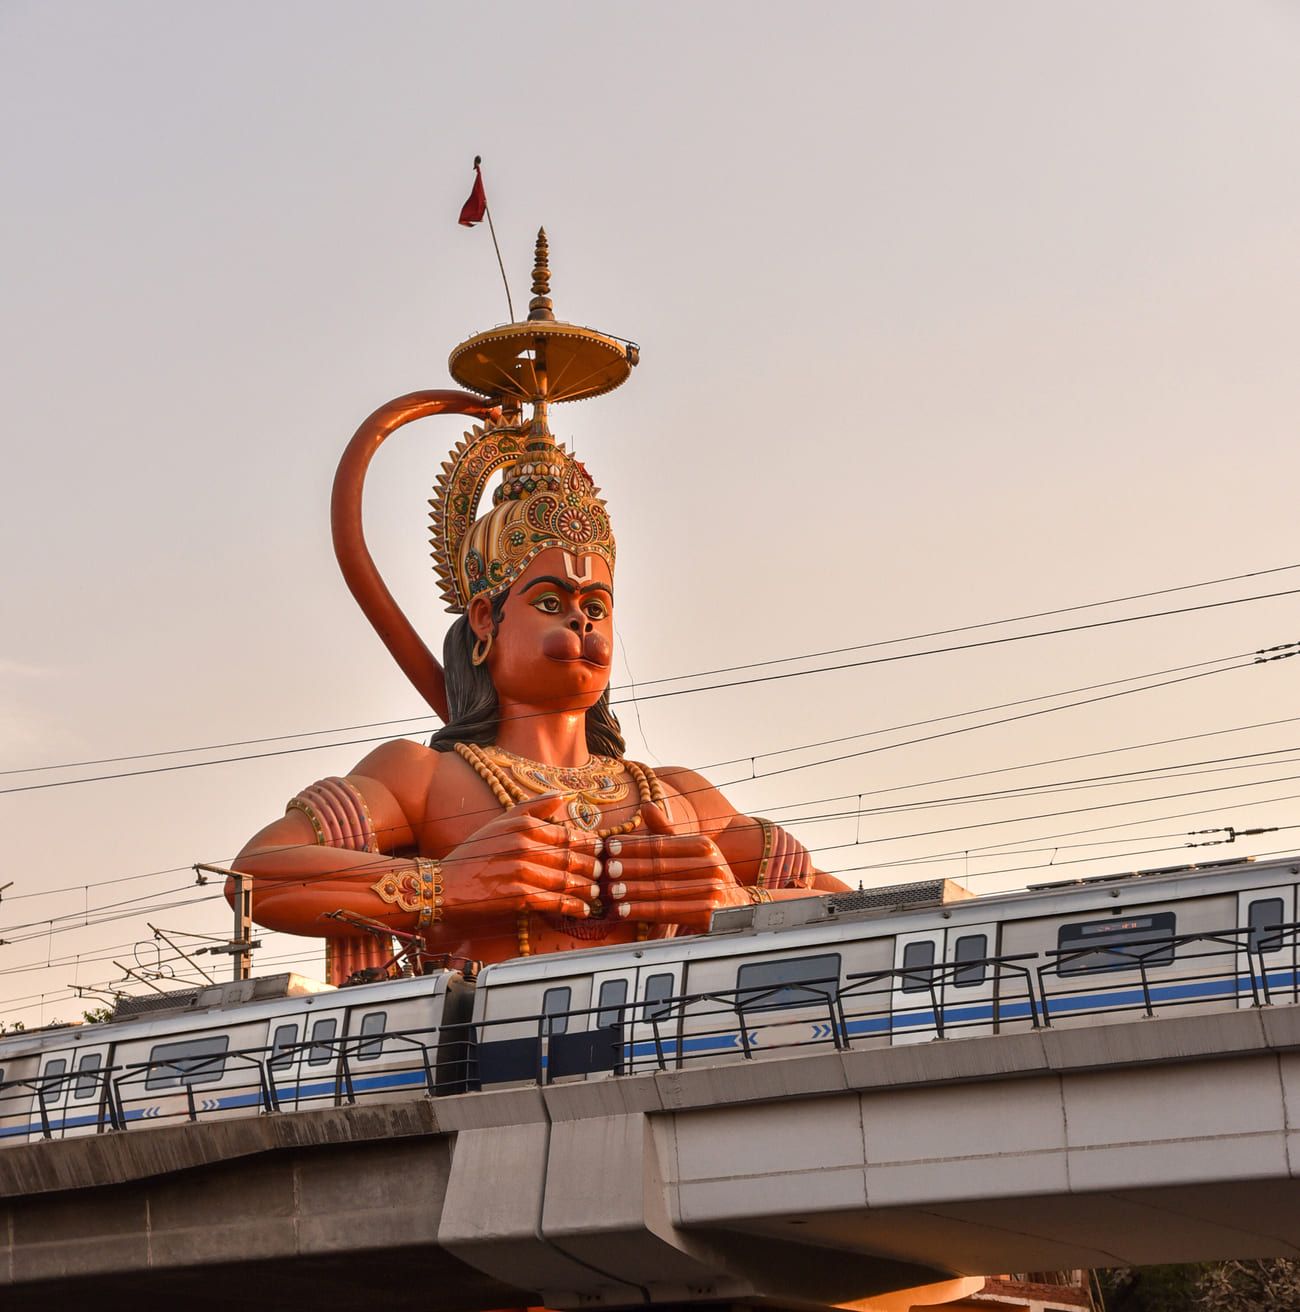 U-Bahn am Hanuman-Tempel in Delhi vorbei